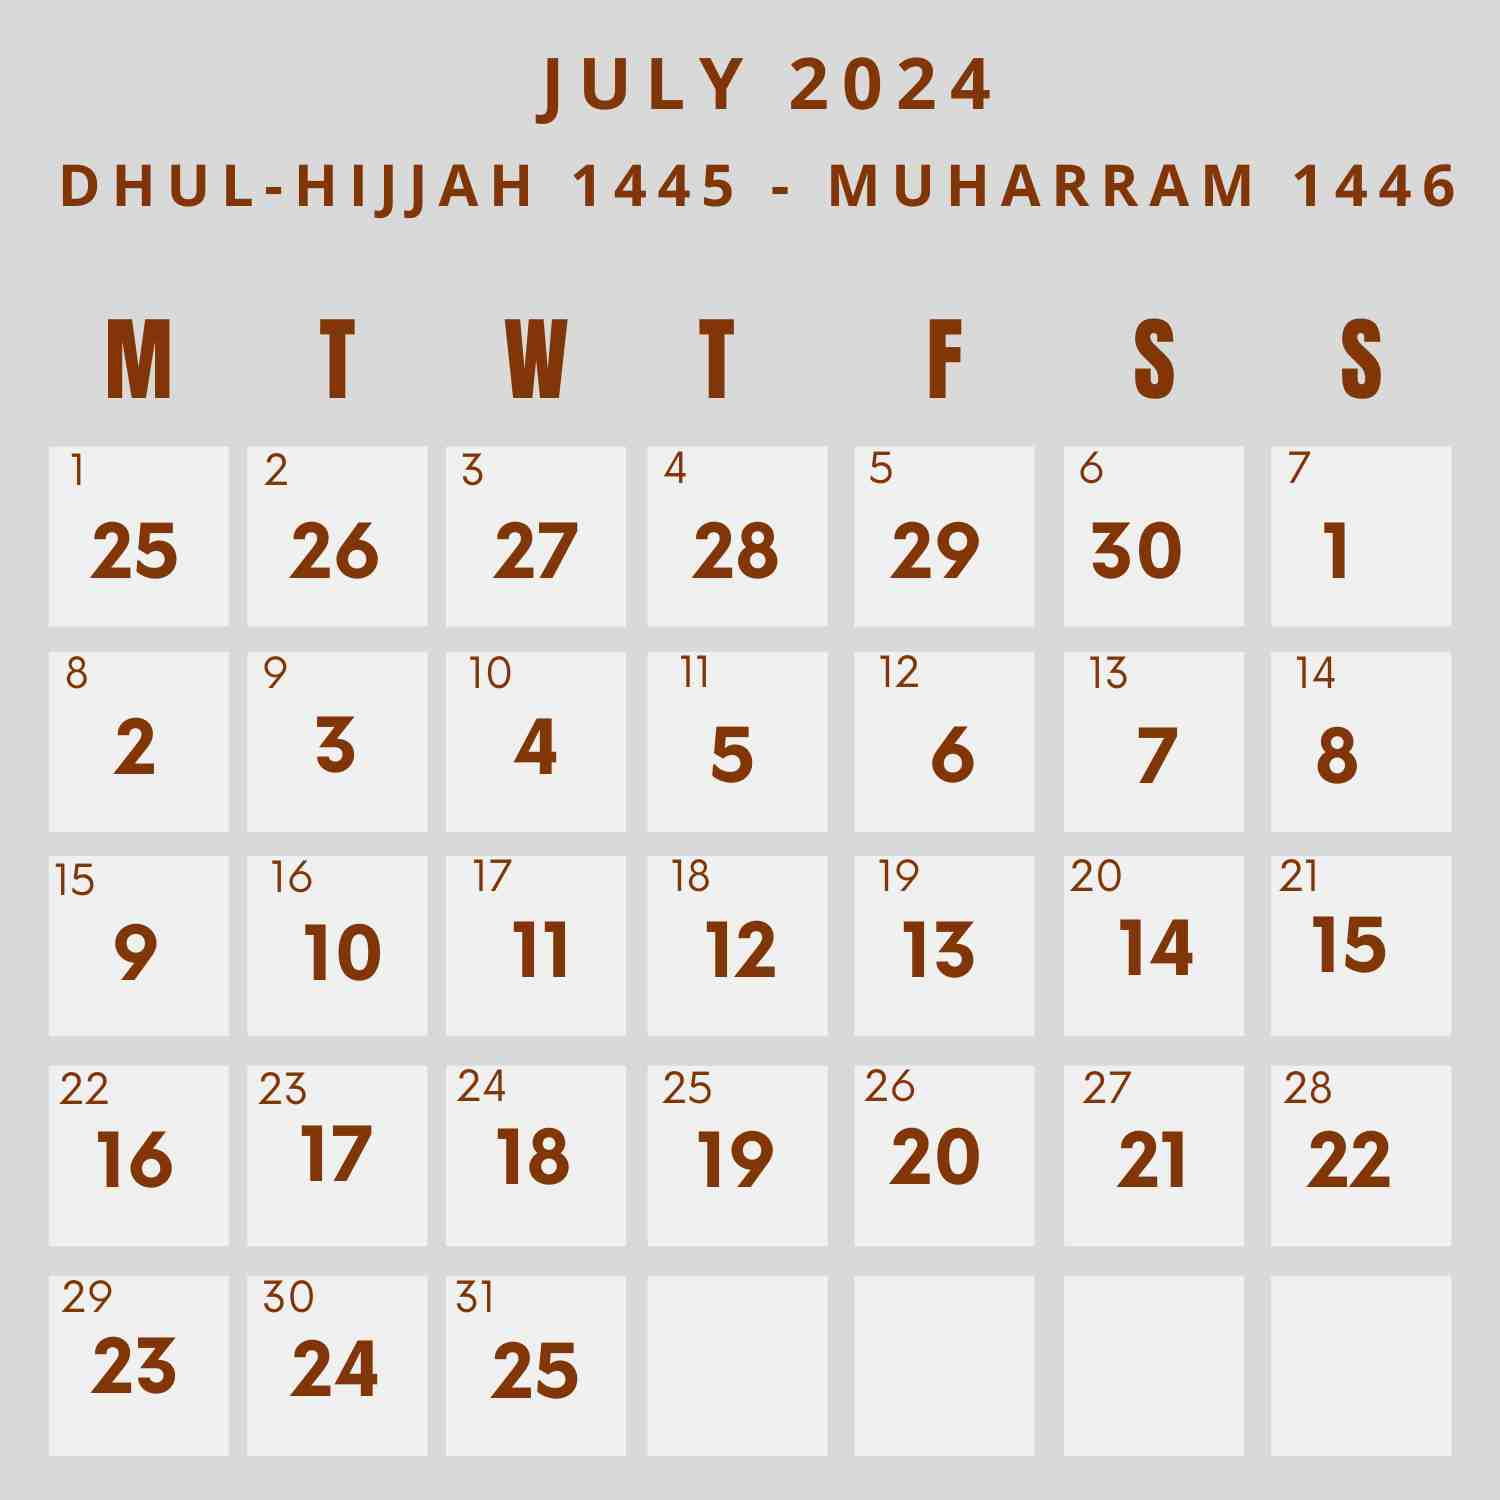 Islamic Calendar 2024 - Khwajadarbar regarding 18 July 2024 In Islamic Calendar